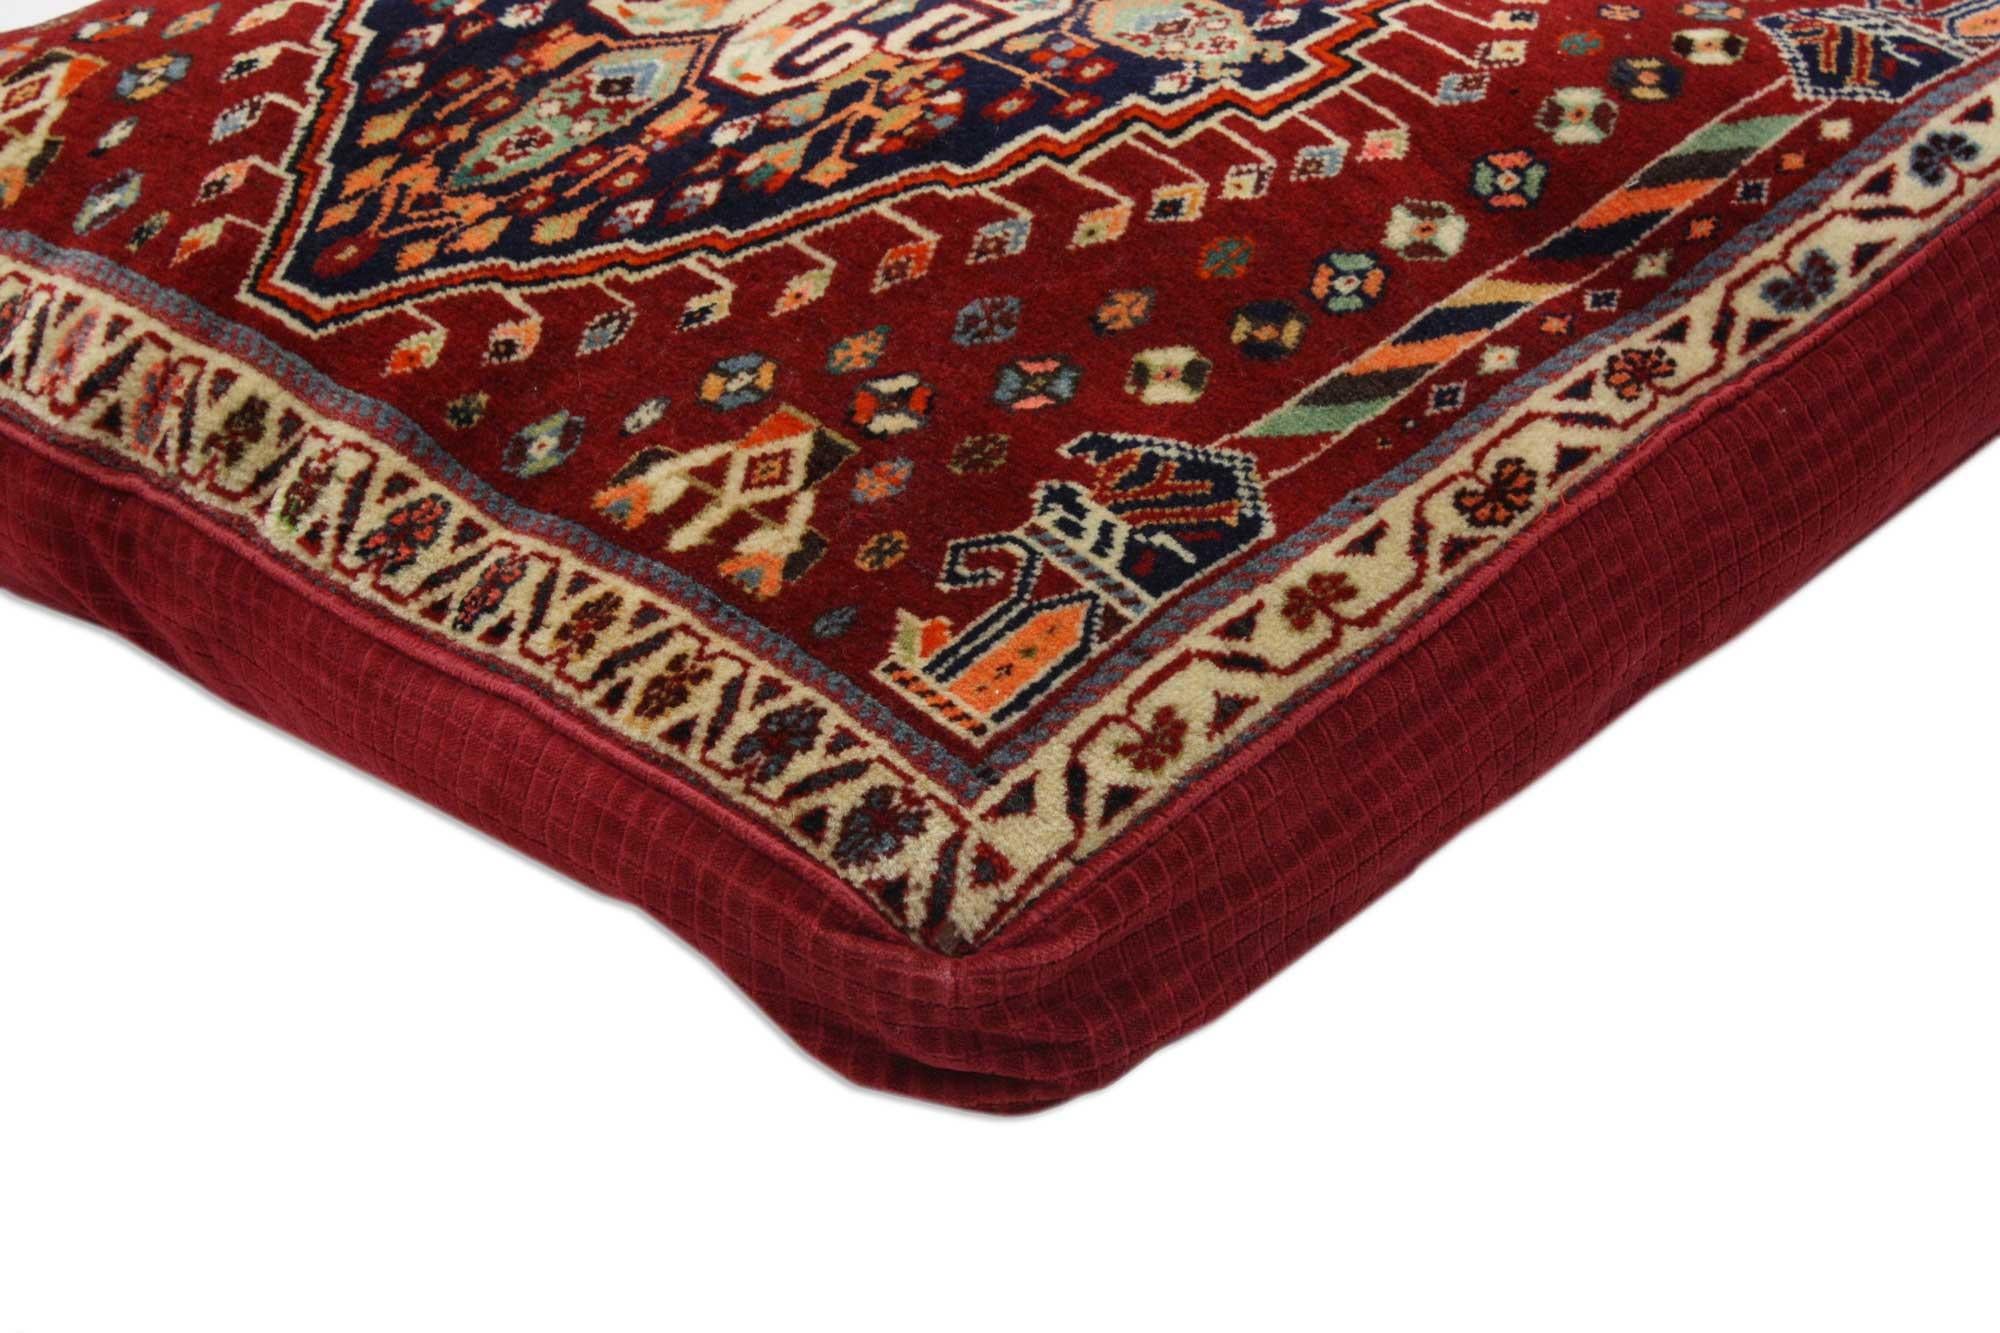 Pair of Antique Persian Floor Cushions Poshti Pillows In Good Condition For Sale In Dallas, TX